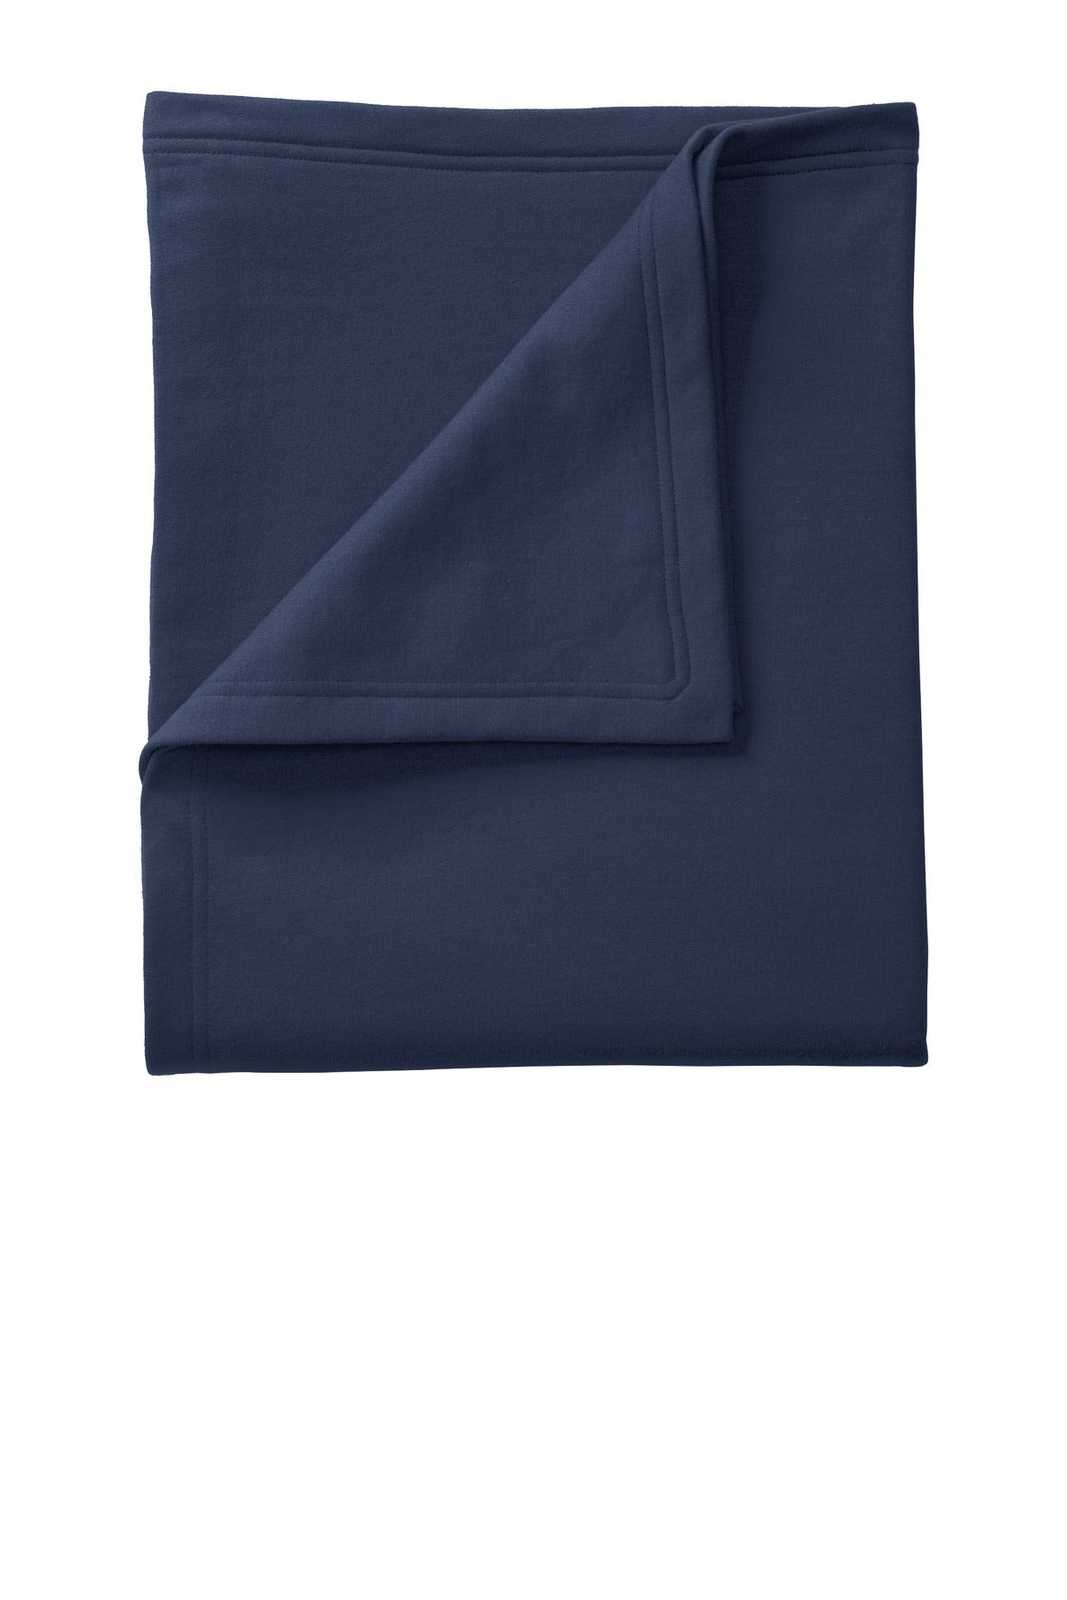 Port &amp; Company BP78 Core Fleece Sweatshirt Blanket - Navy - HIT a Double - 1